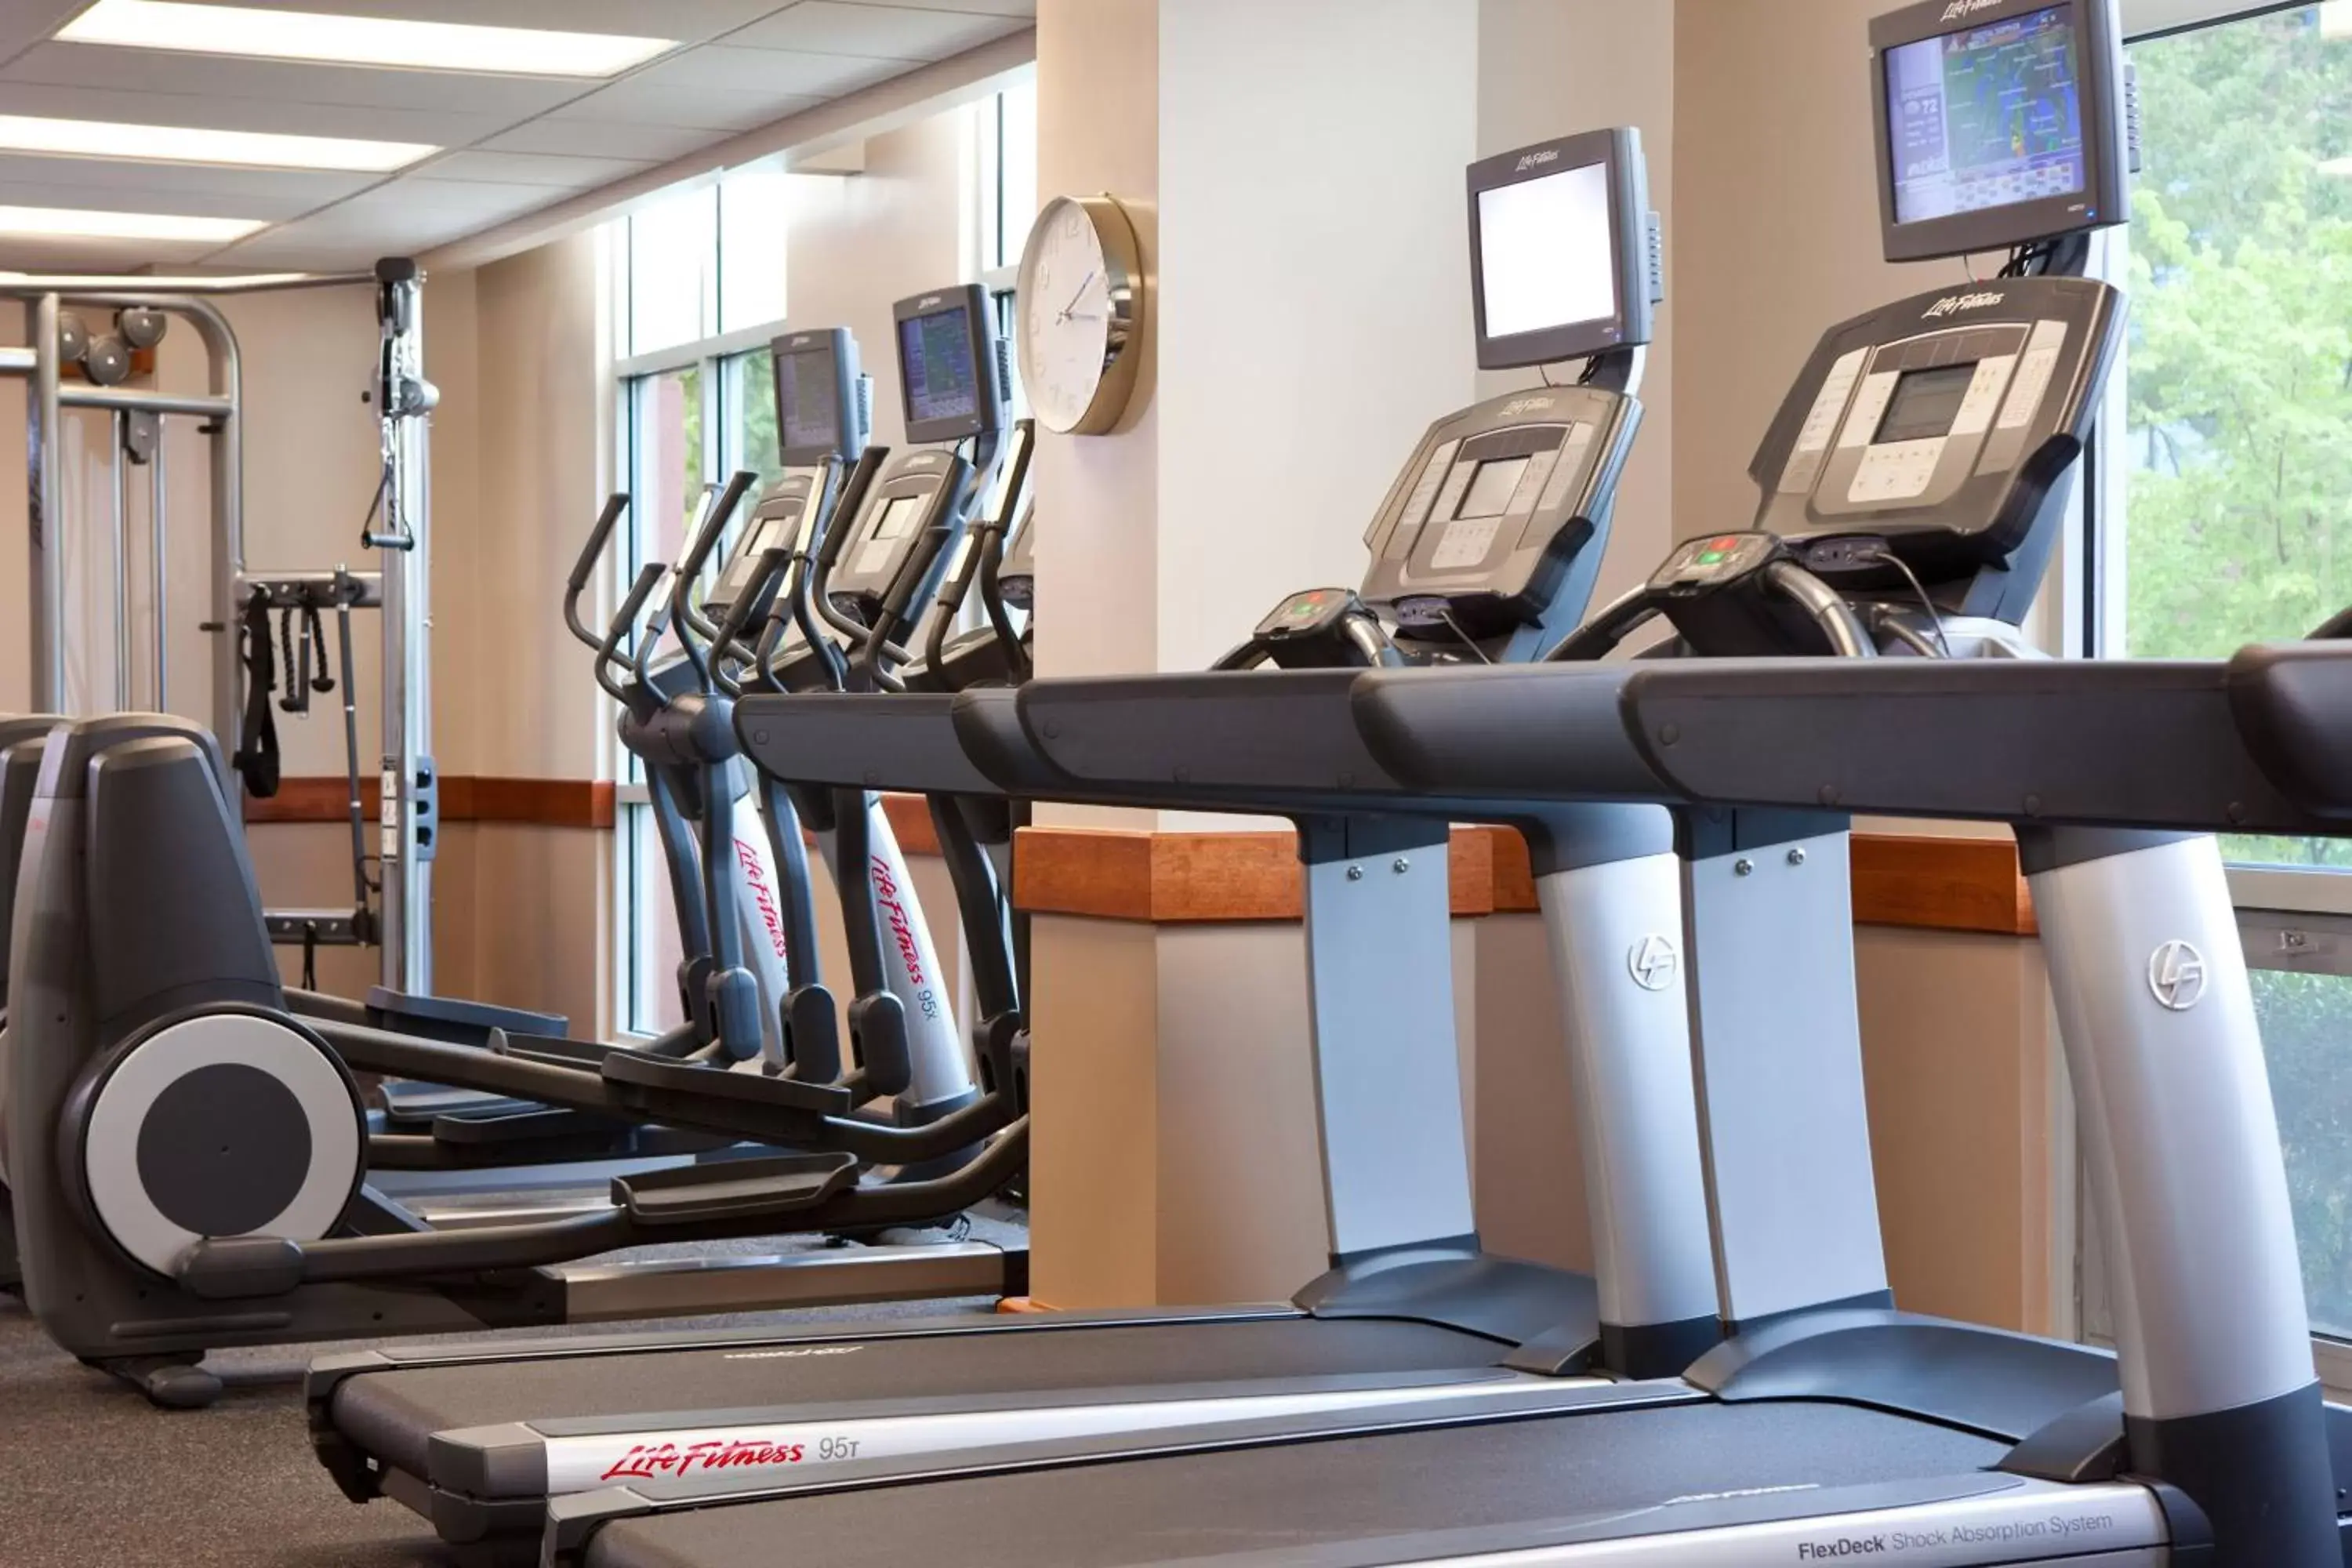 Fitness centre/facilities, Fitness Center/Facilities in Gaithersburg Marriott Washingtonian Center